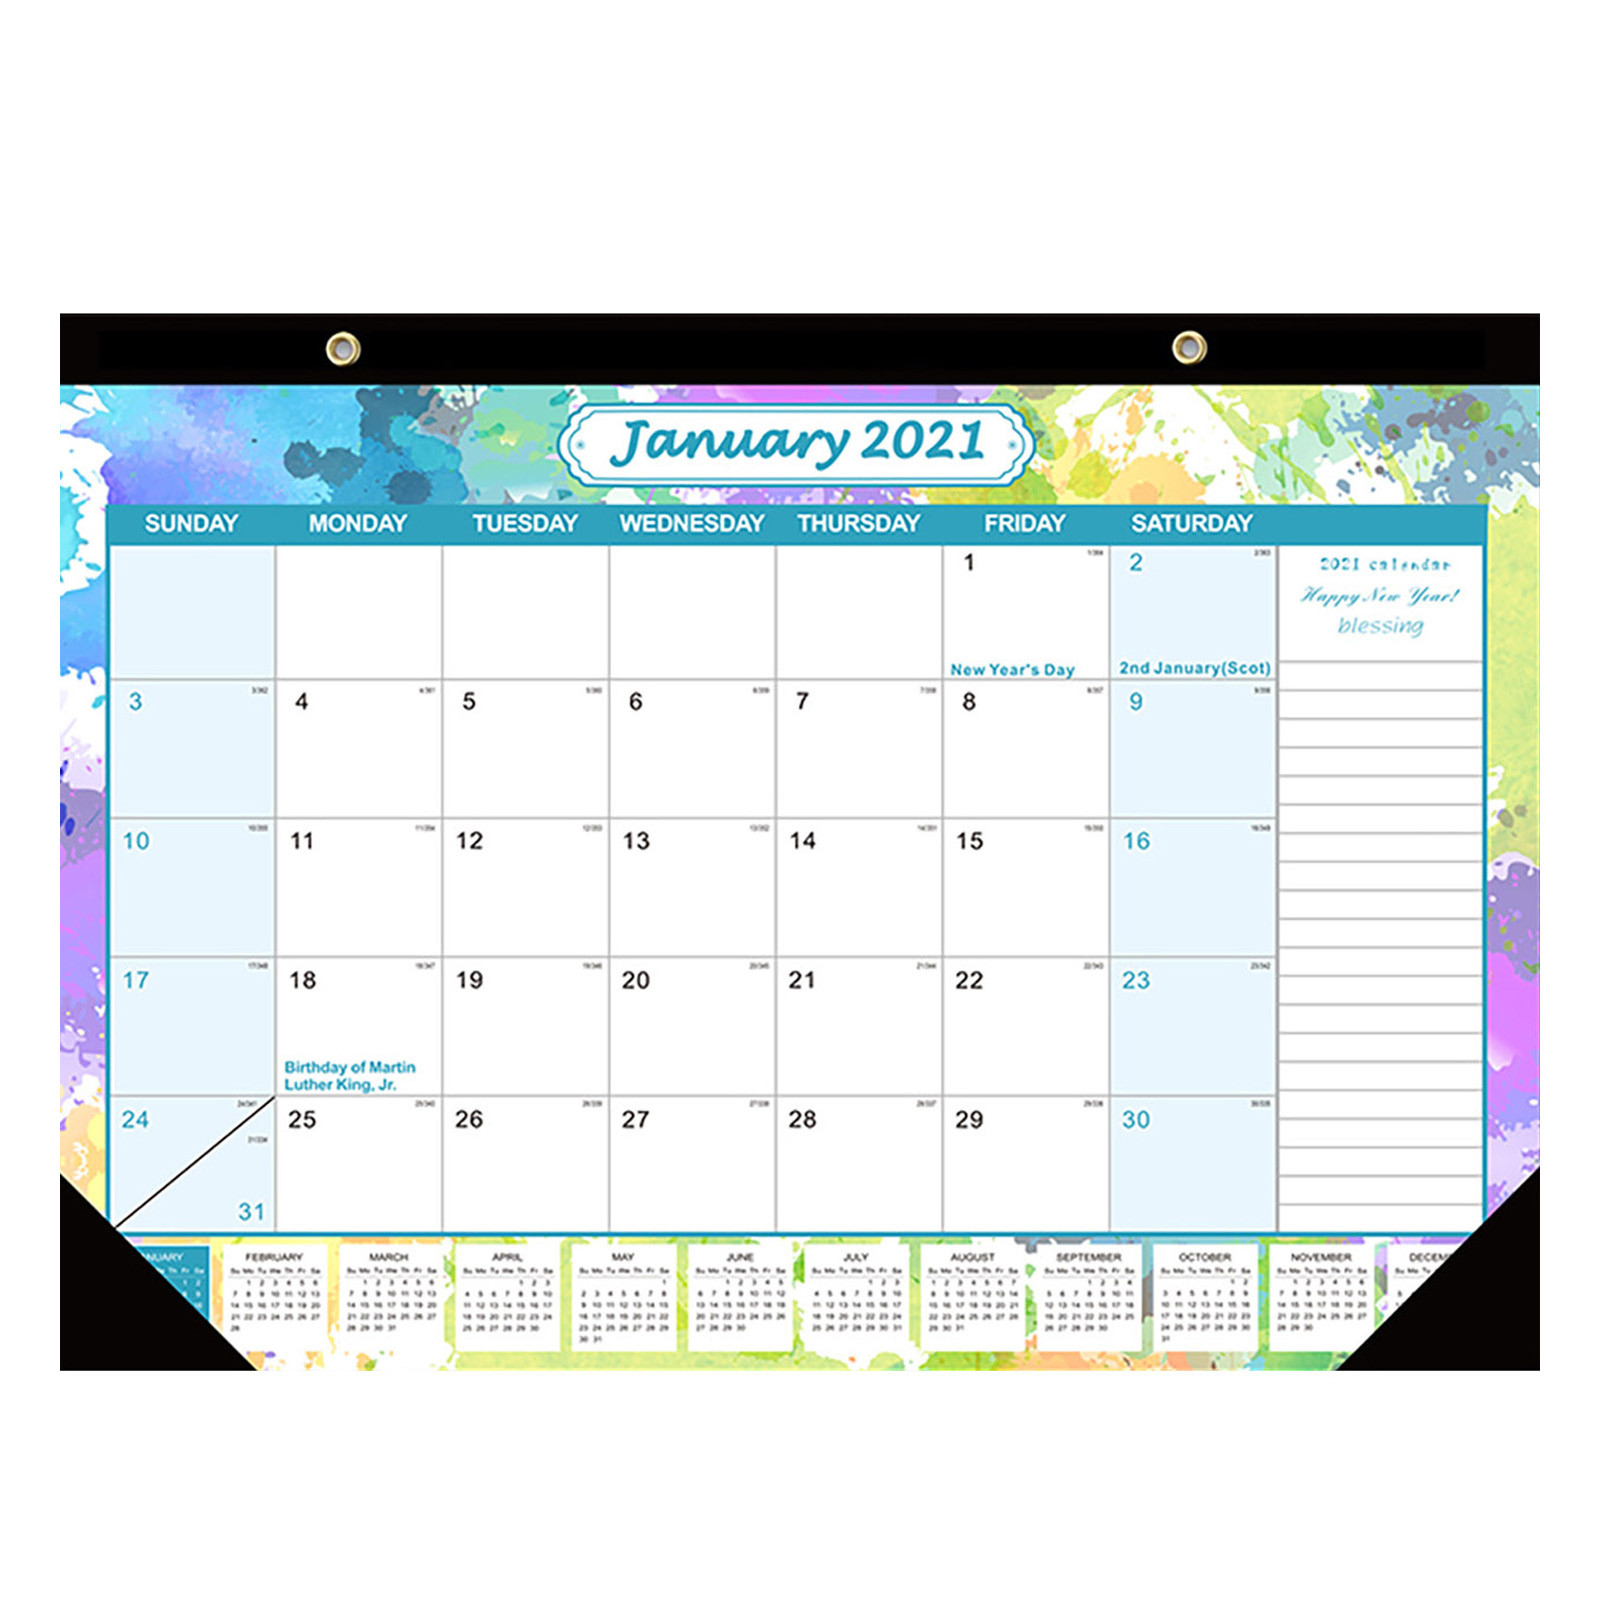 Julian Date Code Calendar 2021 Example Calendar Printable